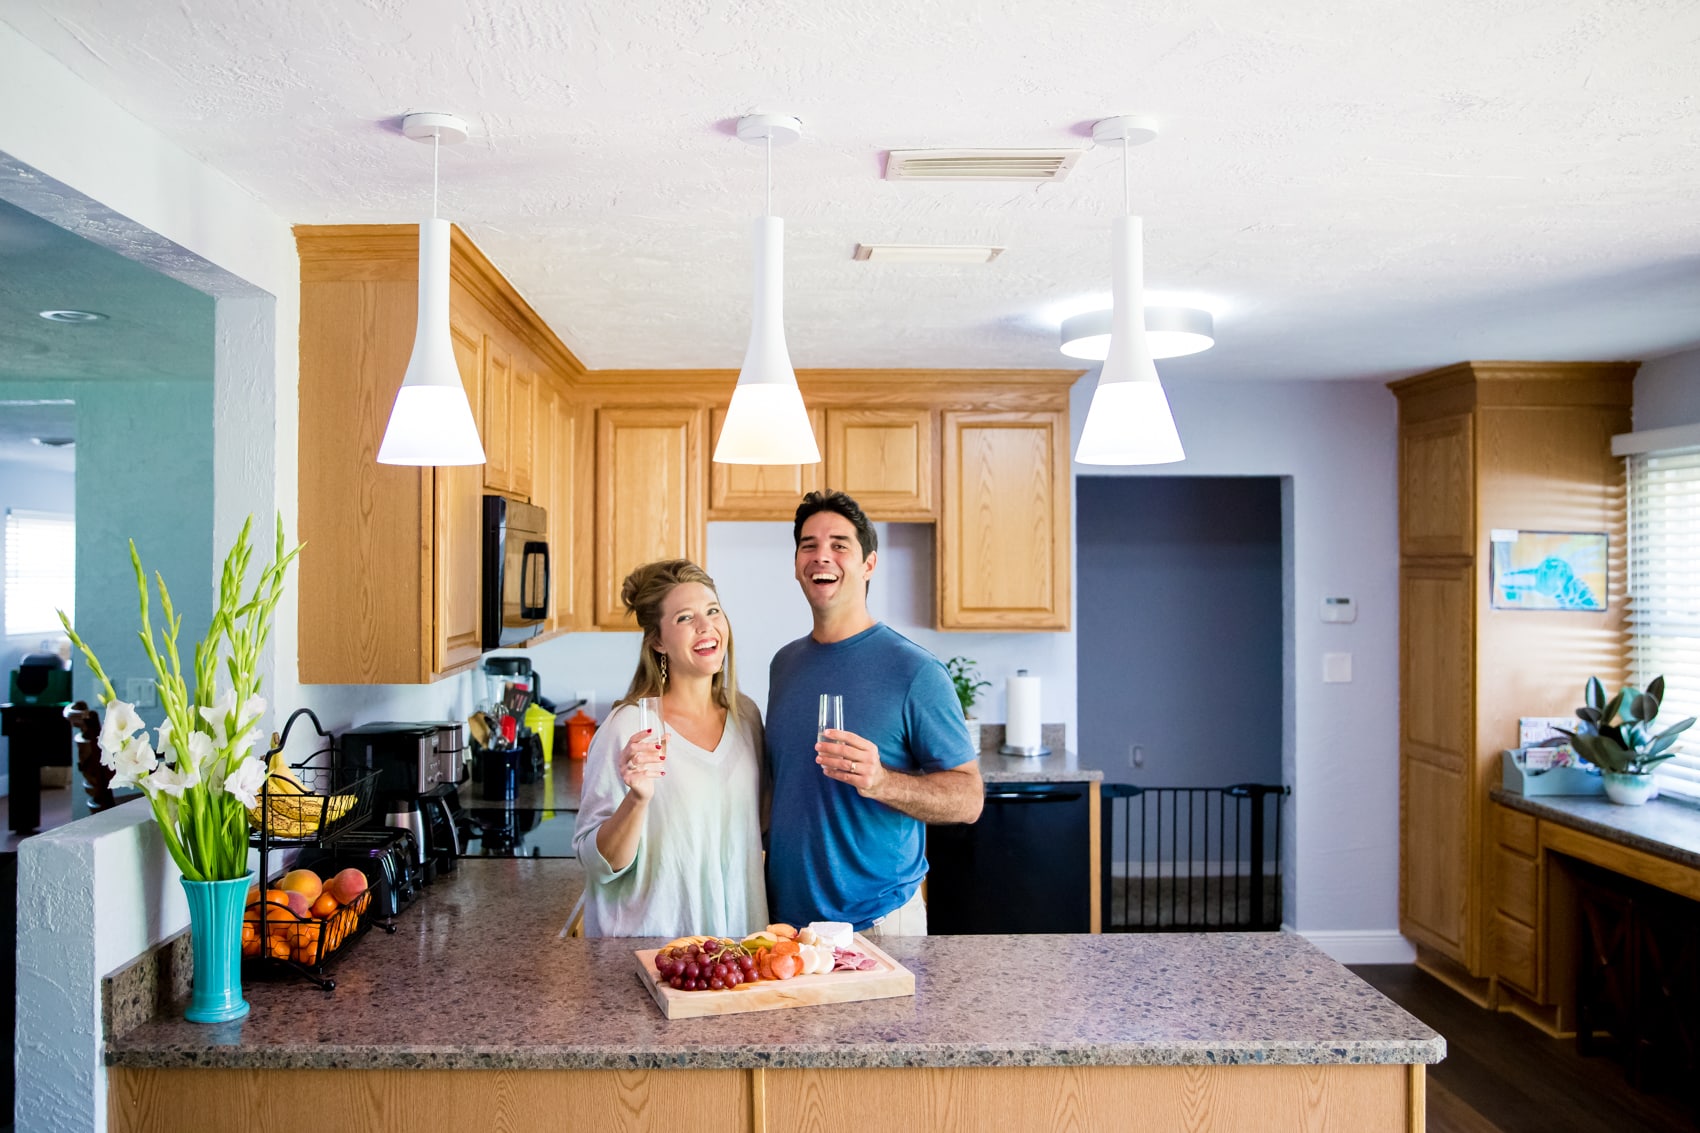 Smart Lighting For Your Home: 5 Reasons To Buy Philips Hue Lighting